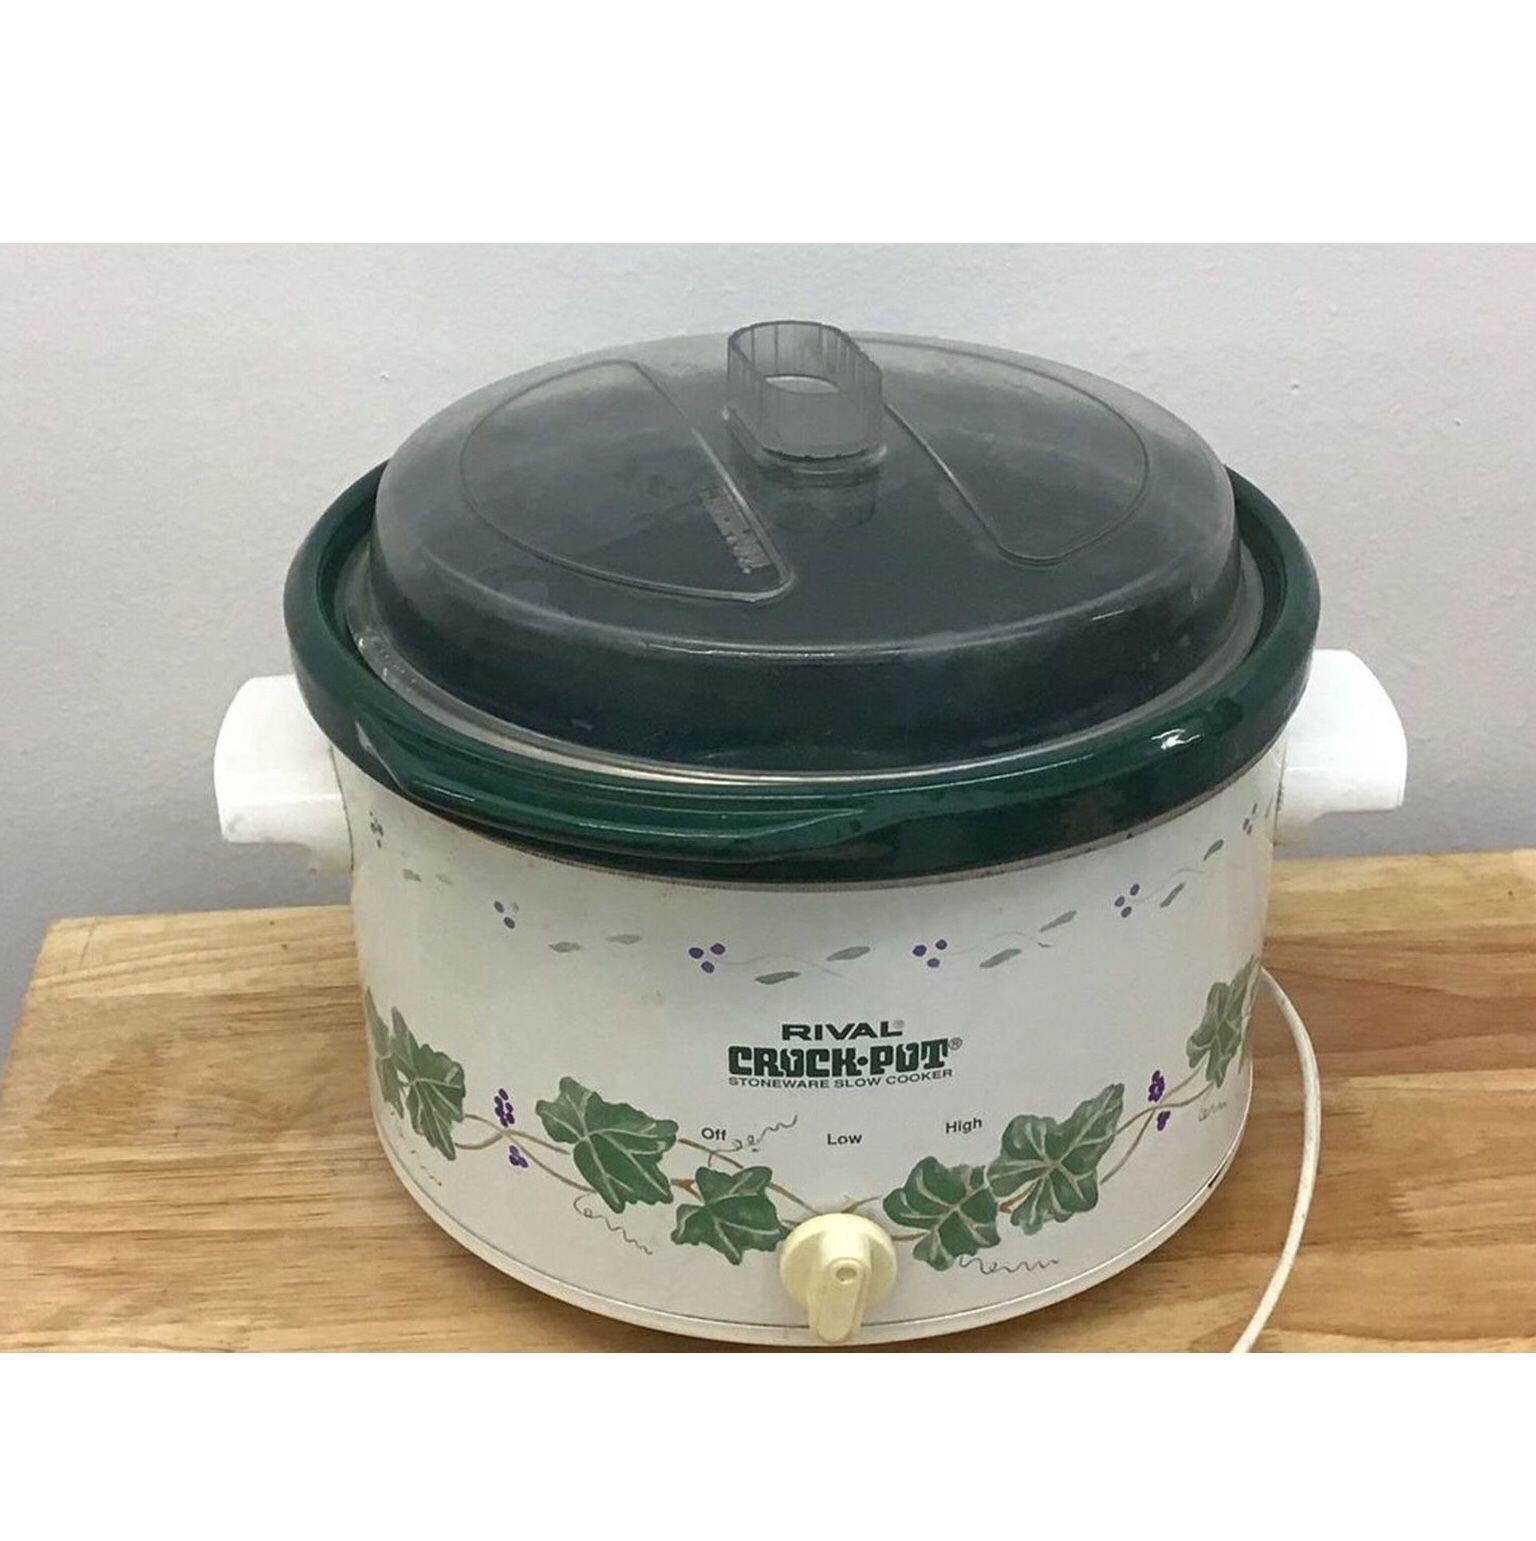 Vintage Rival Emerald Green Crock Pot Slow Cooker for Sale in